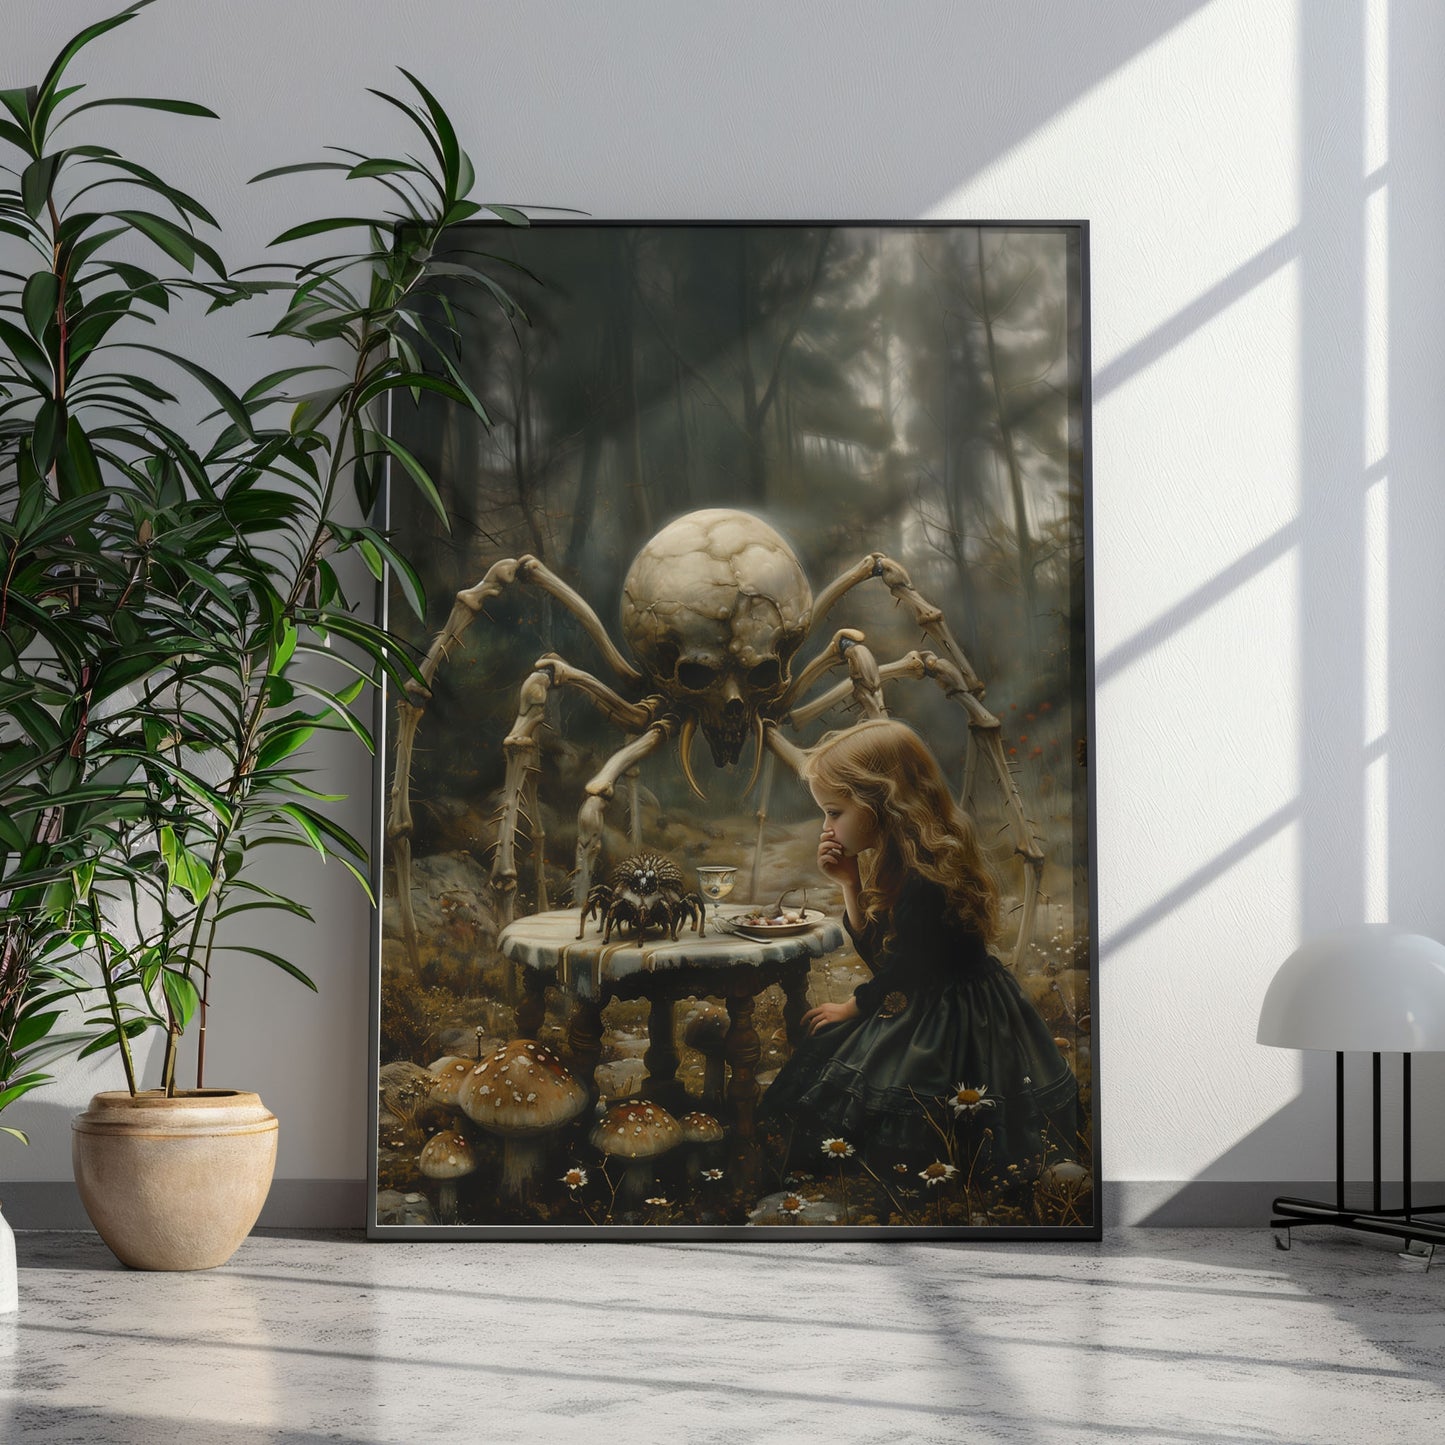 Macabre Poster of Little Girl having Dinner with Skeletal Spider